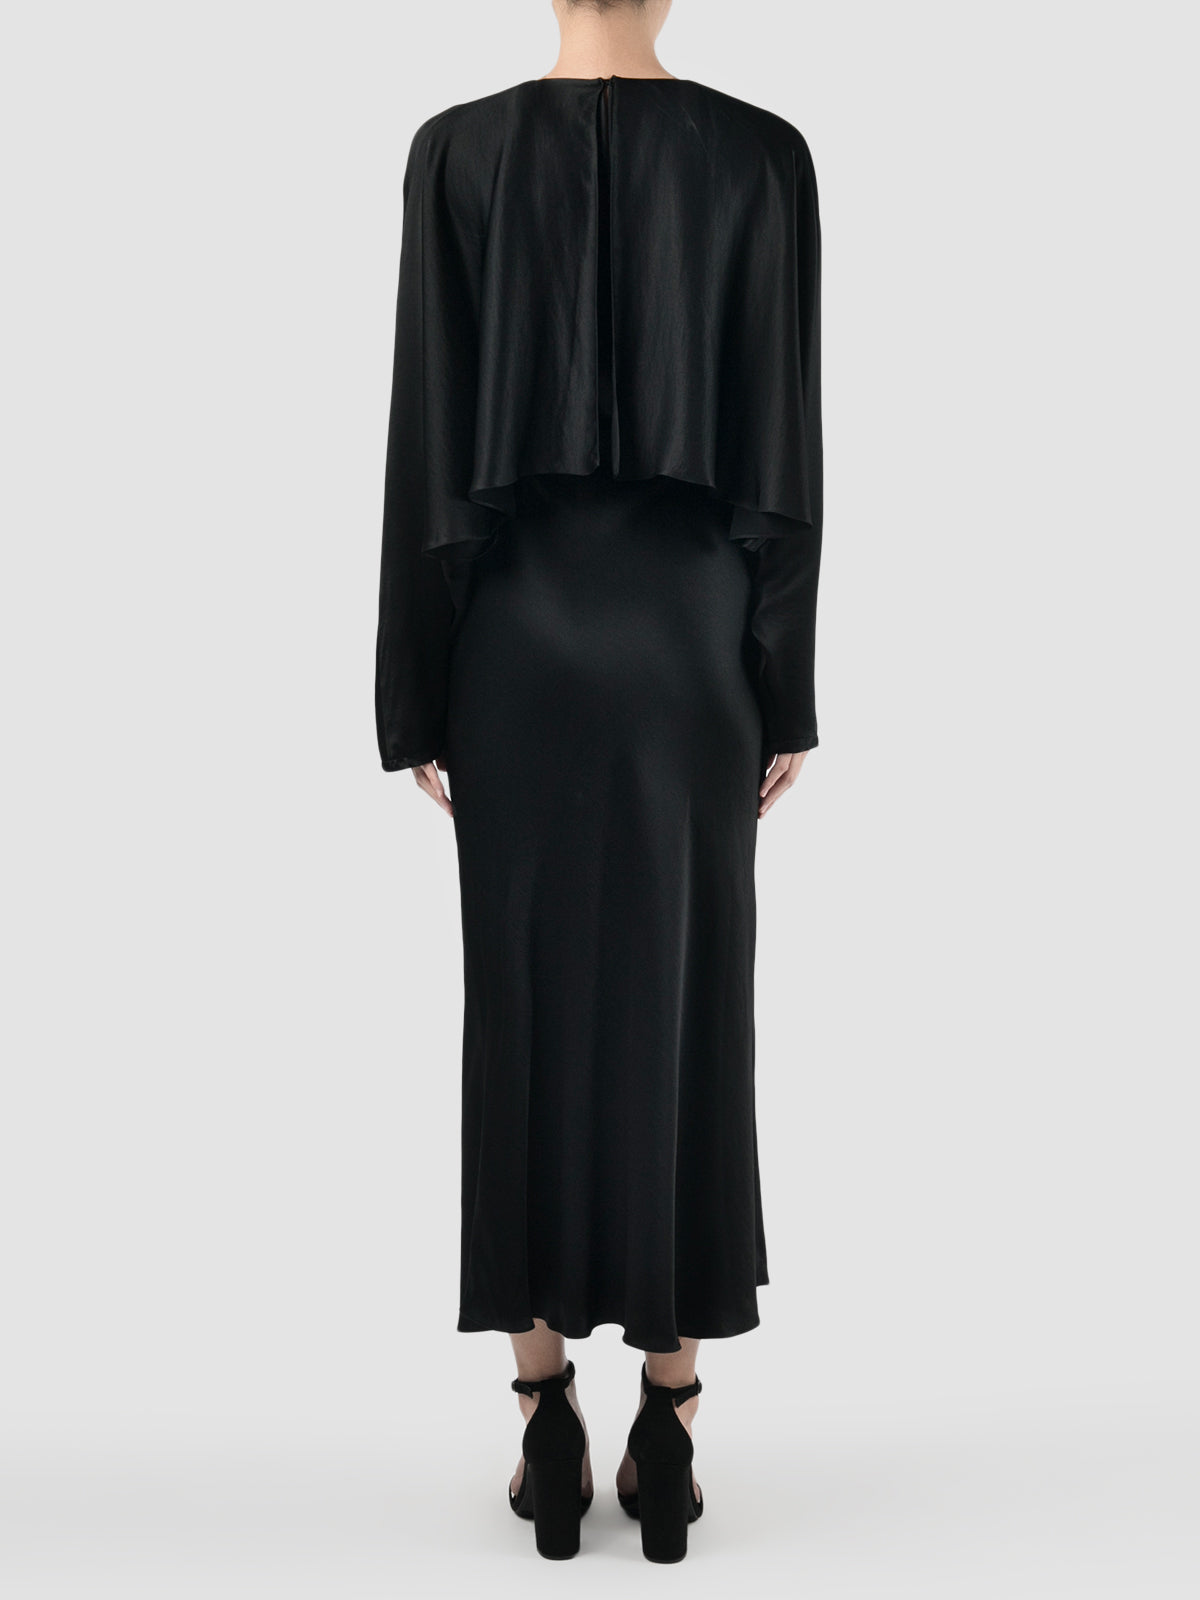 Black satin long-sleeved caped midi dress